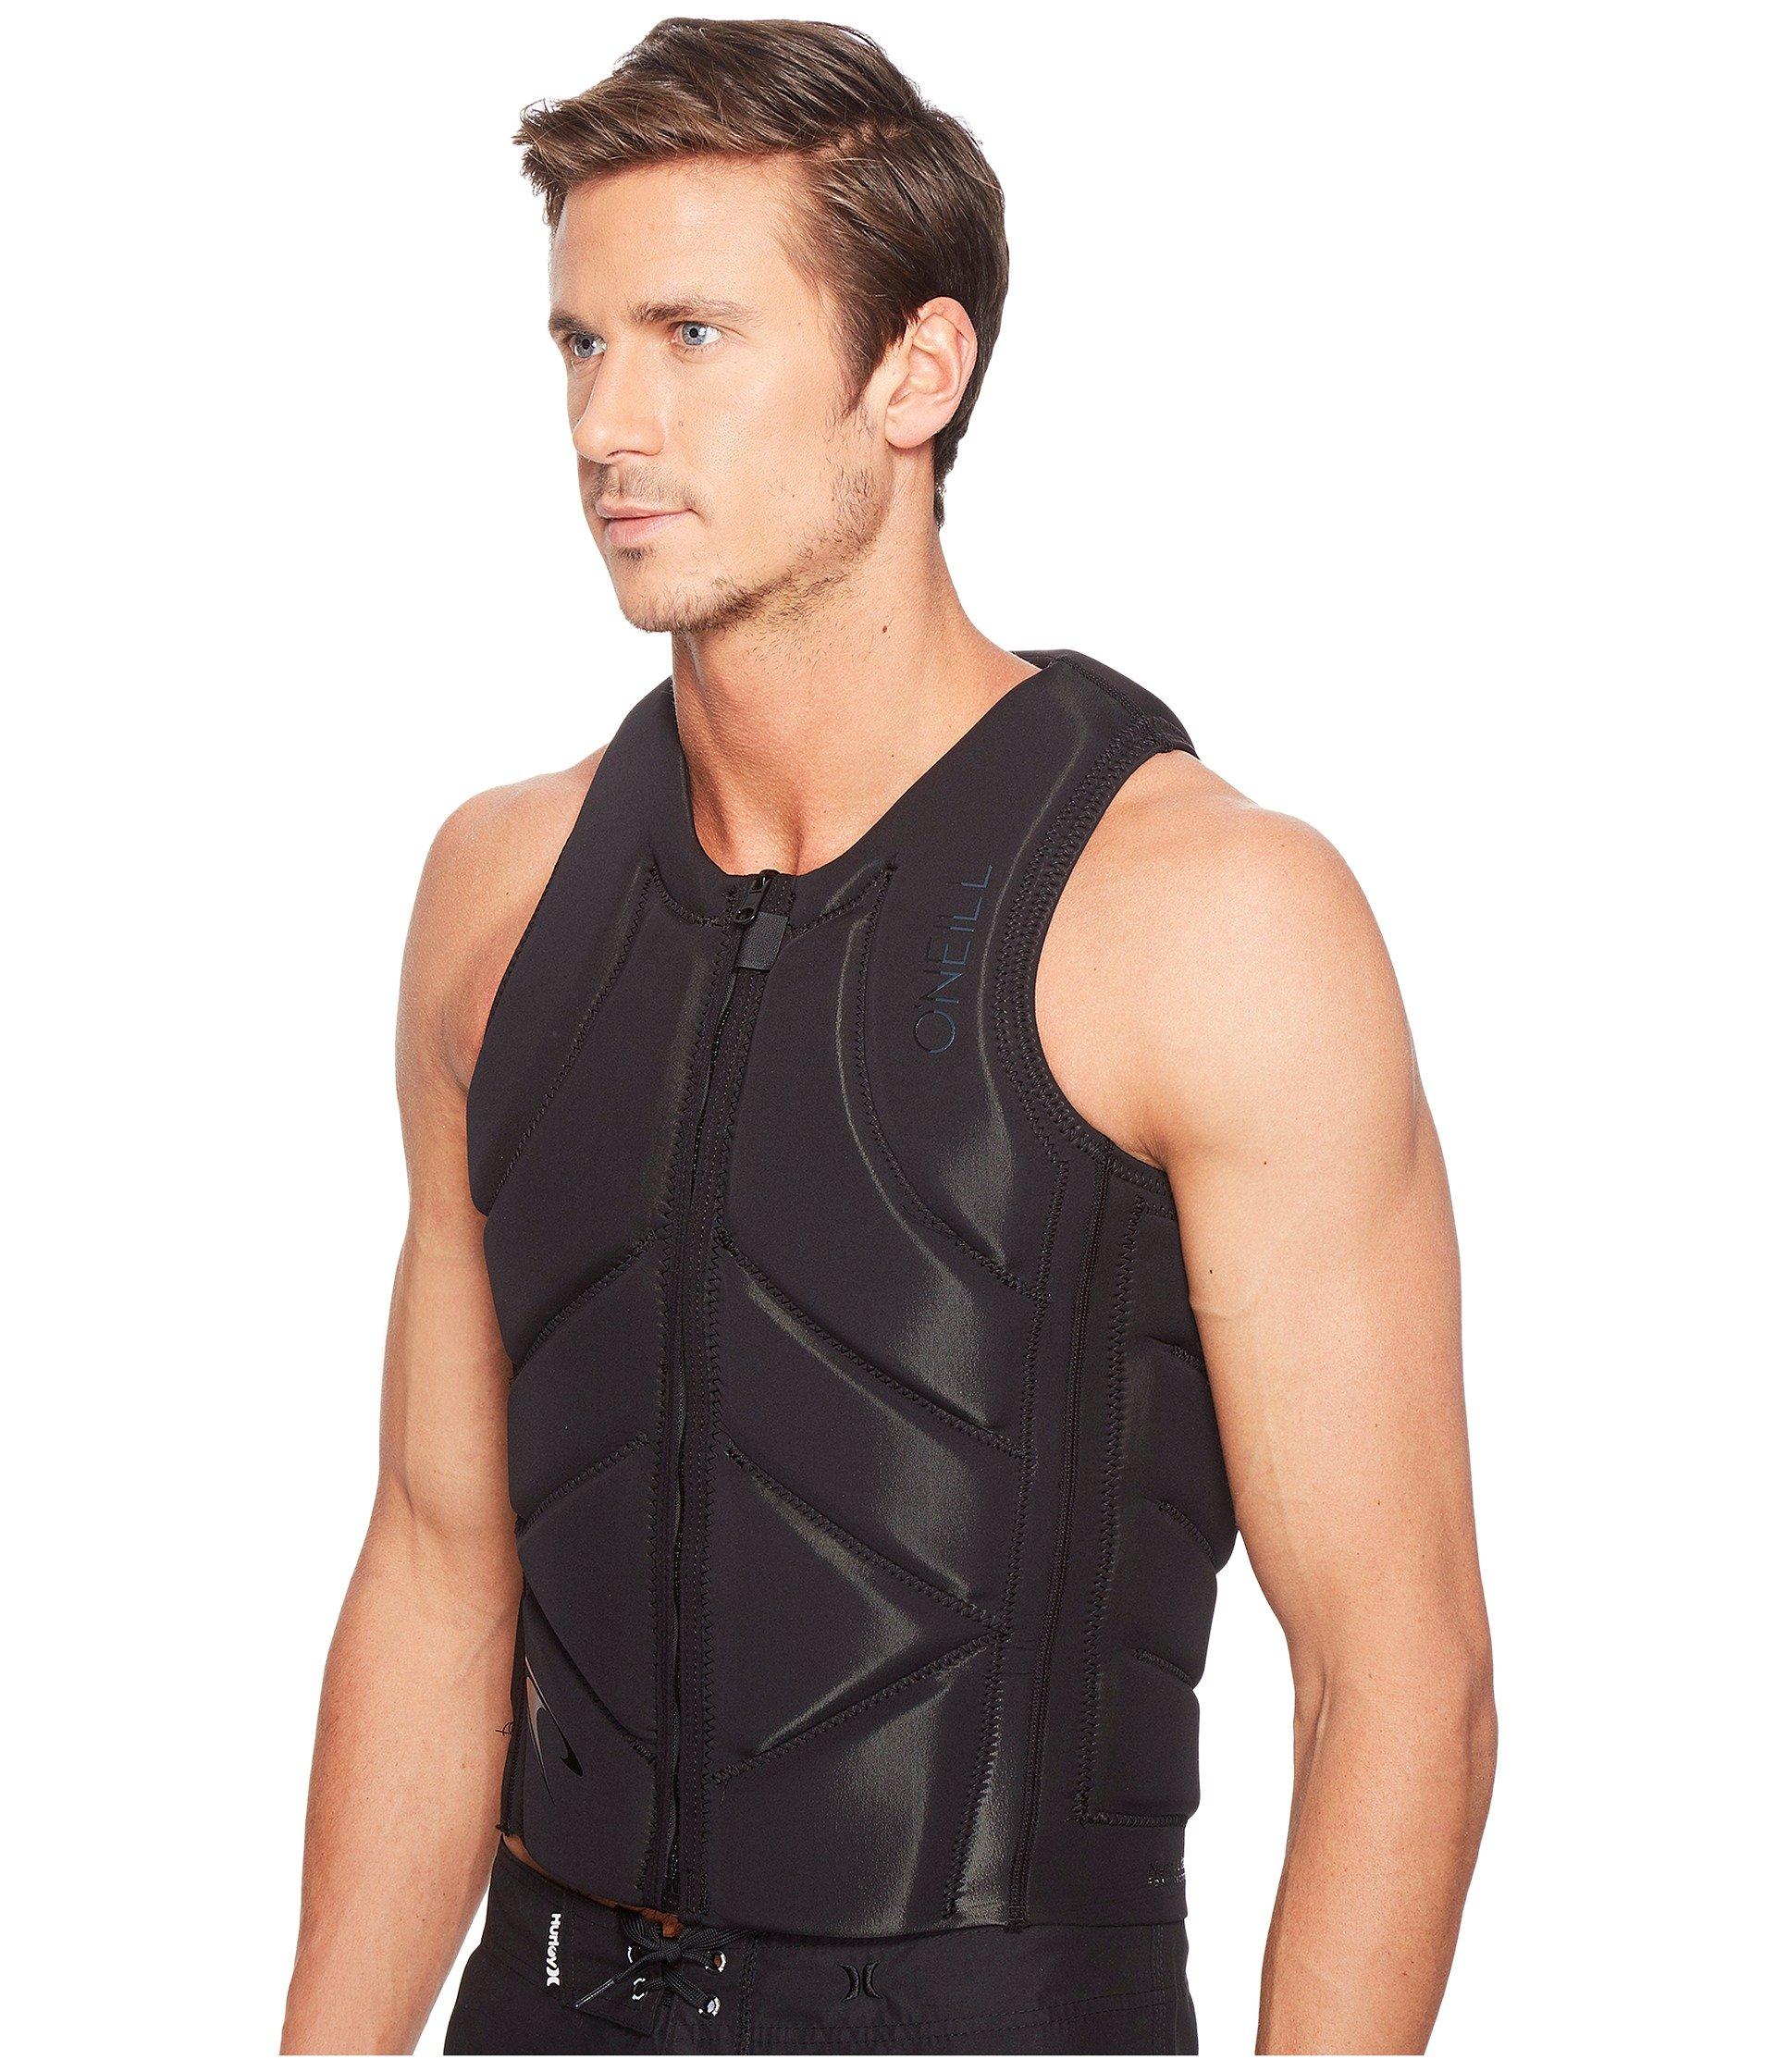 O'Neill Men's Slasher Comp Life Vest